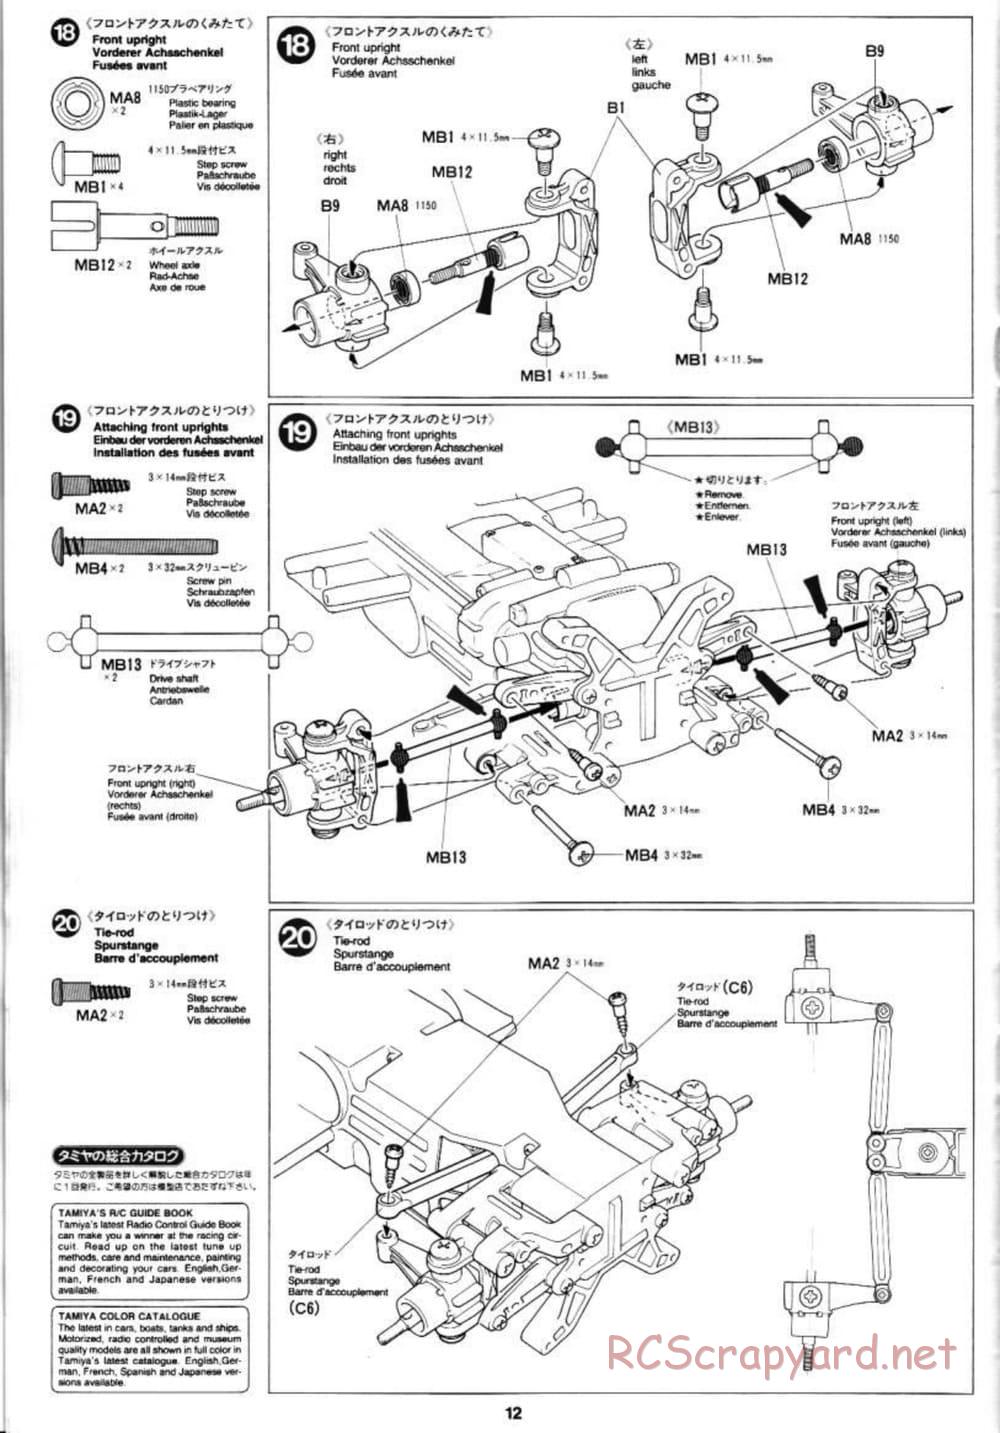 Tamiya - Peugeot 406 ST - TL-01 Chassis - Manual - Page 12